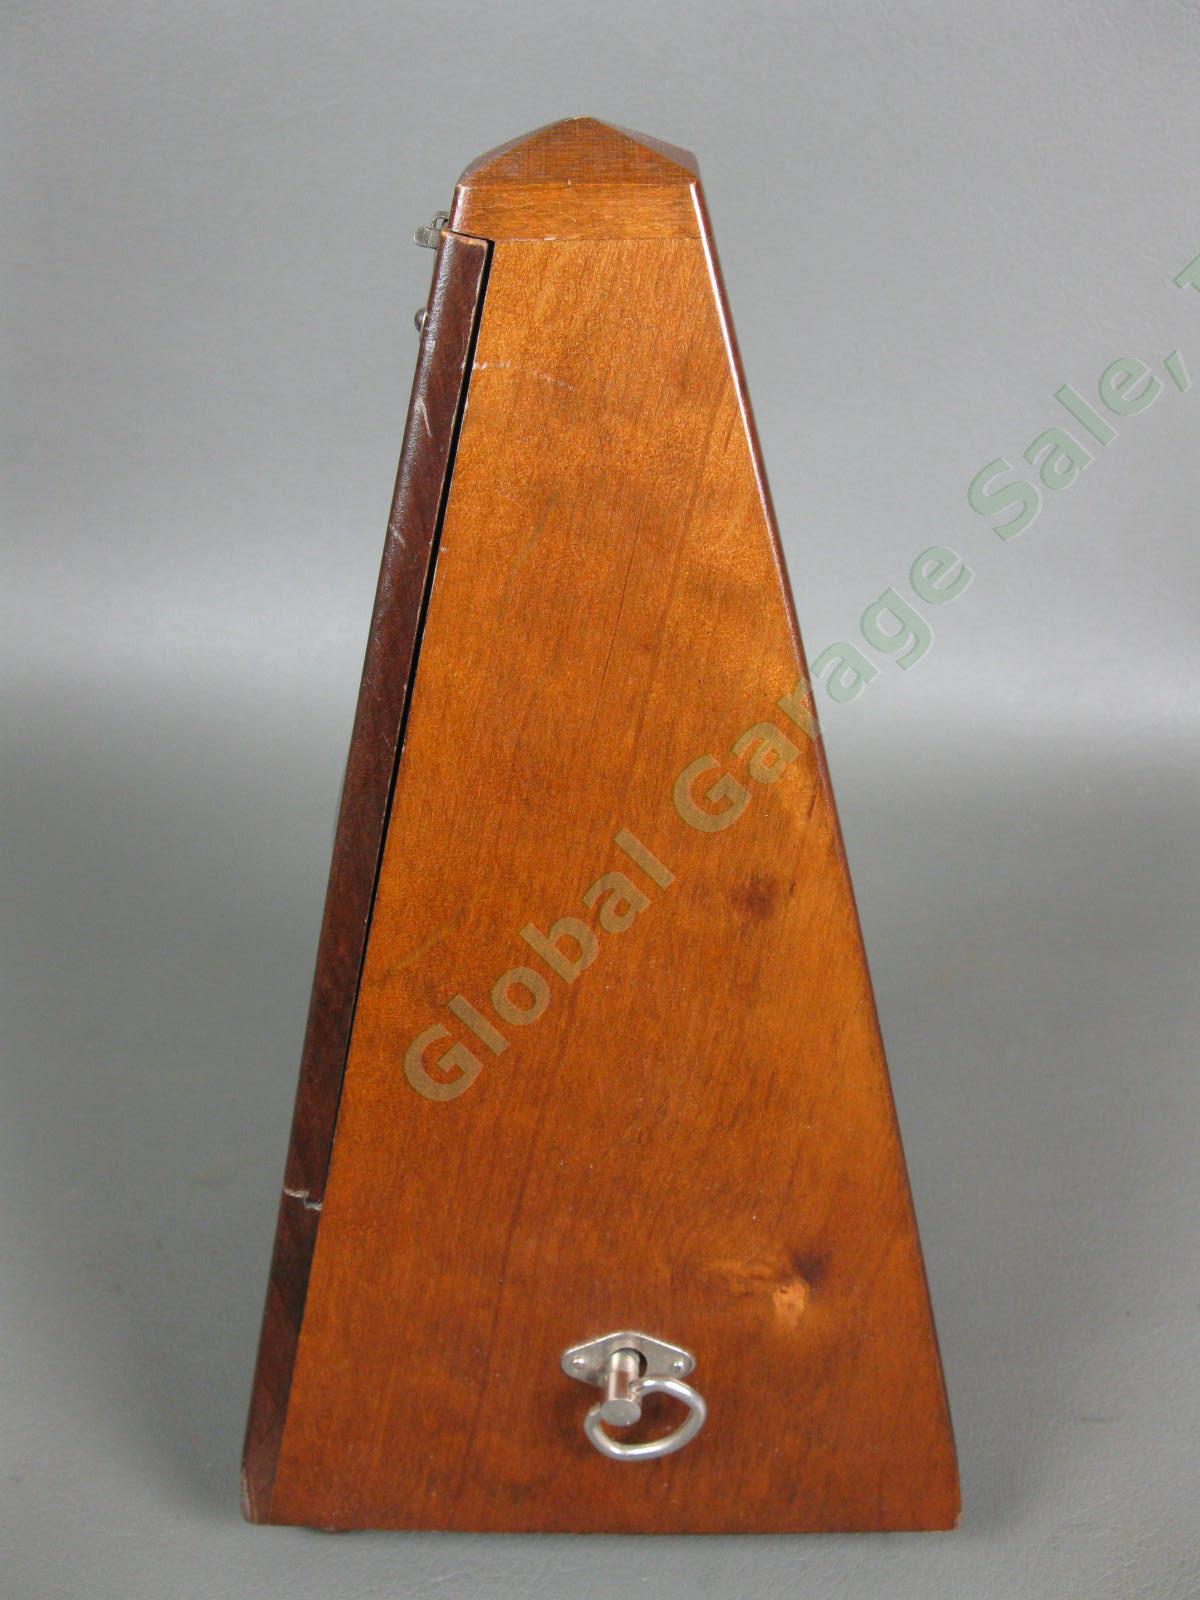 Vintage Wittner Metronome 803m Germany Wood Pyramid Adjustable Speed WORKING 2